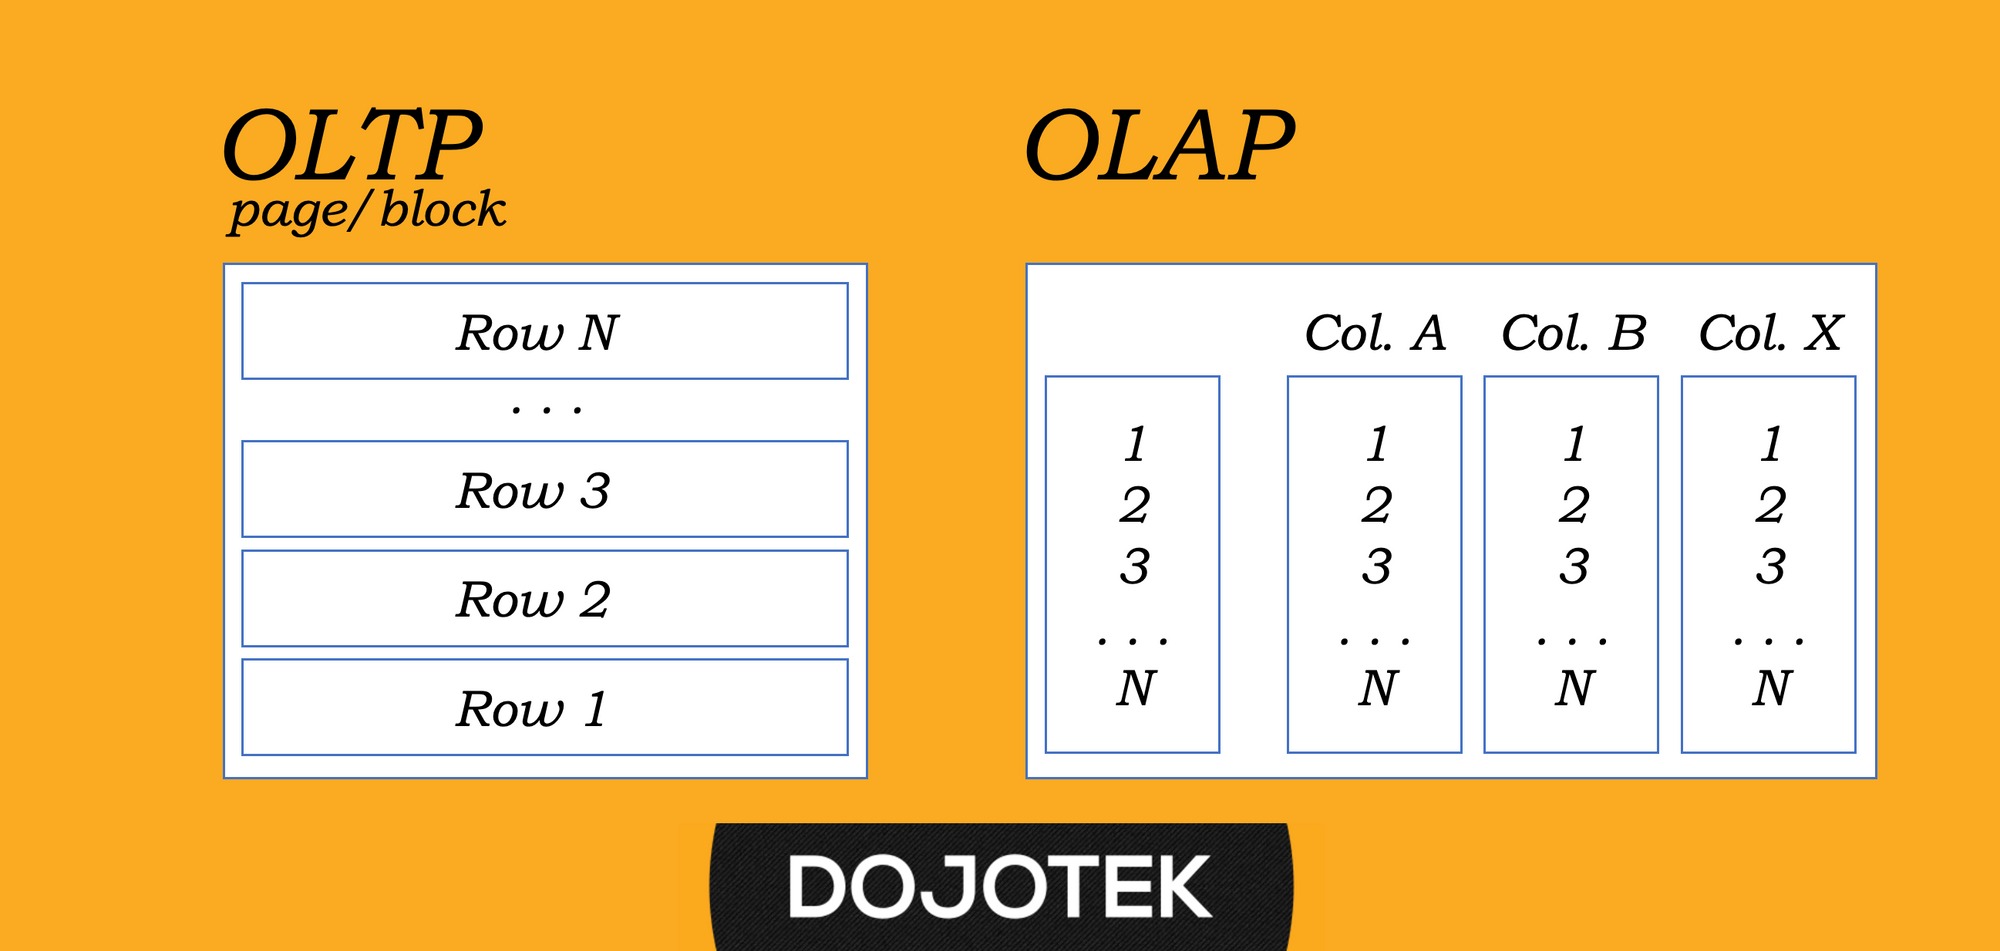 OLAP SQL dengan DuckDB untuk Analisis Data terhadap kumpulan file Apache Parquet